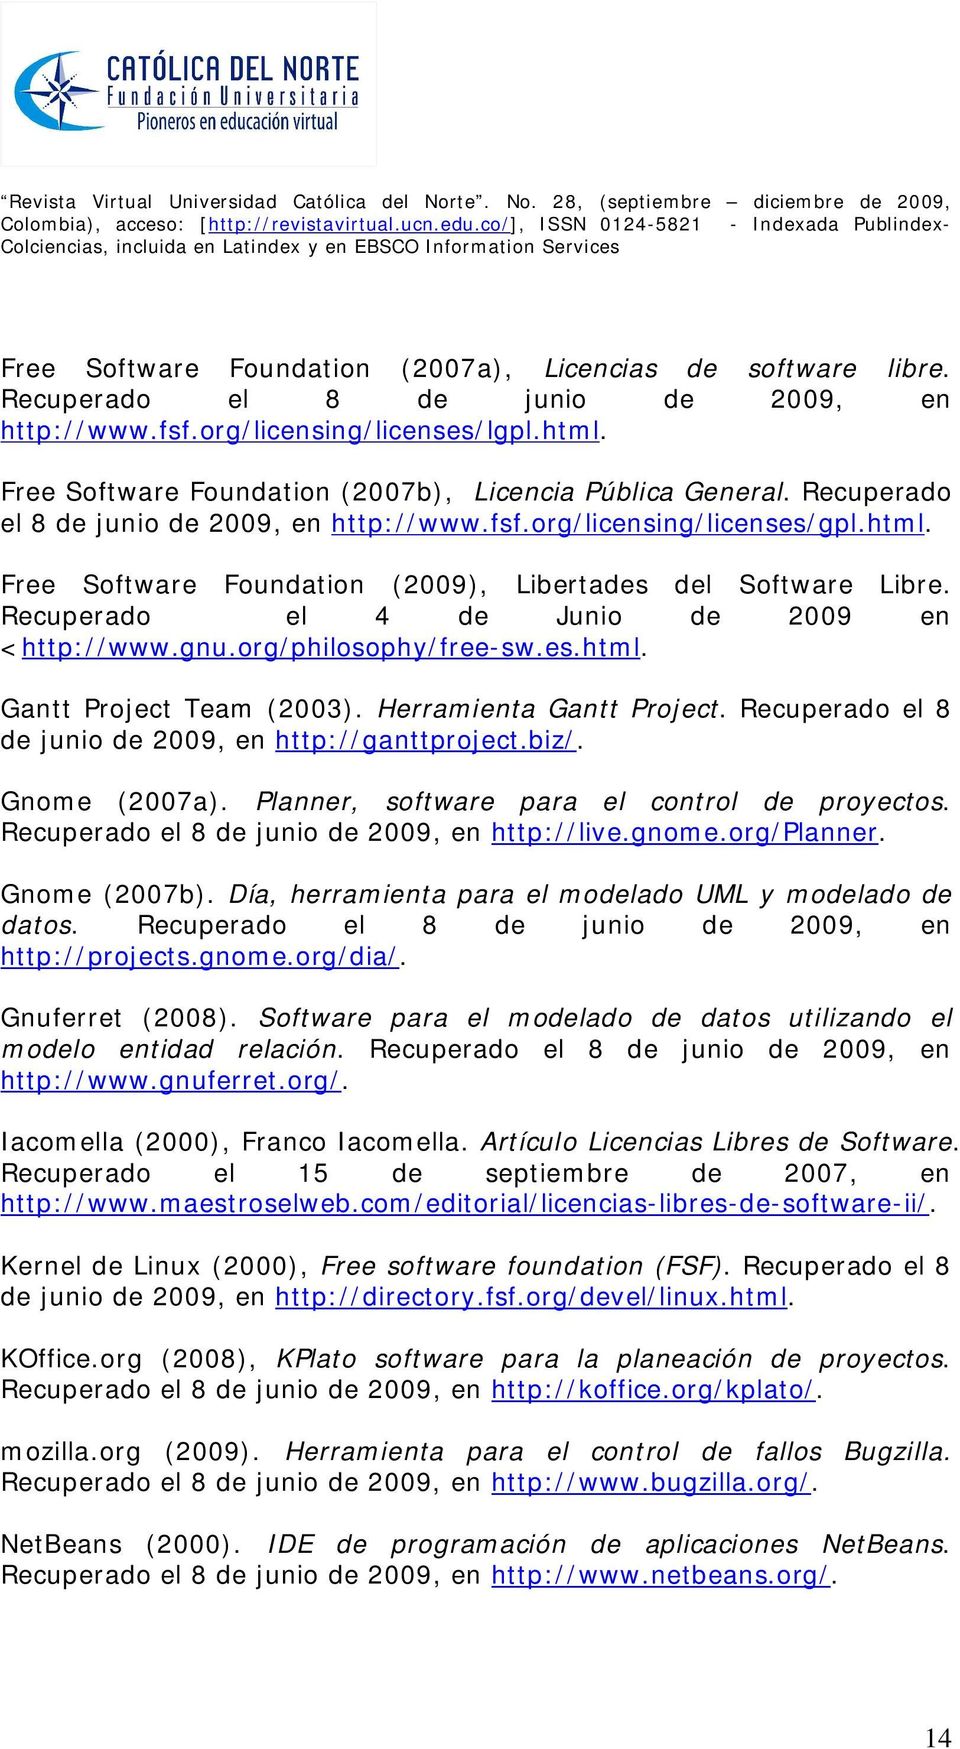 Free Software Foundation (2009), Libertades del Software Libre. Recuperado el 4 de Junio de 2009 en <http://www.gnu.org/philosophy/free-sw.es.html. Gantt Project Team (2003).